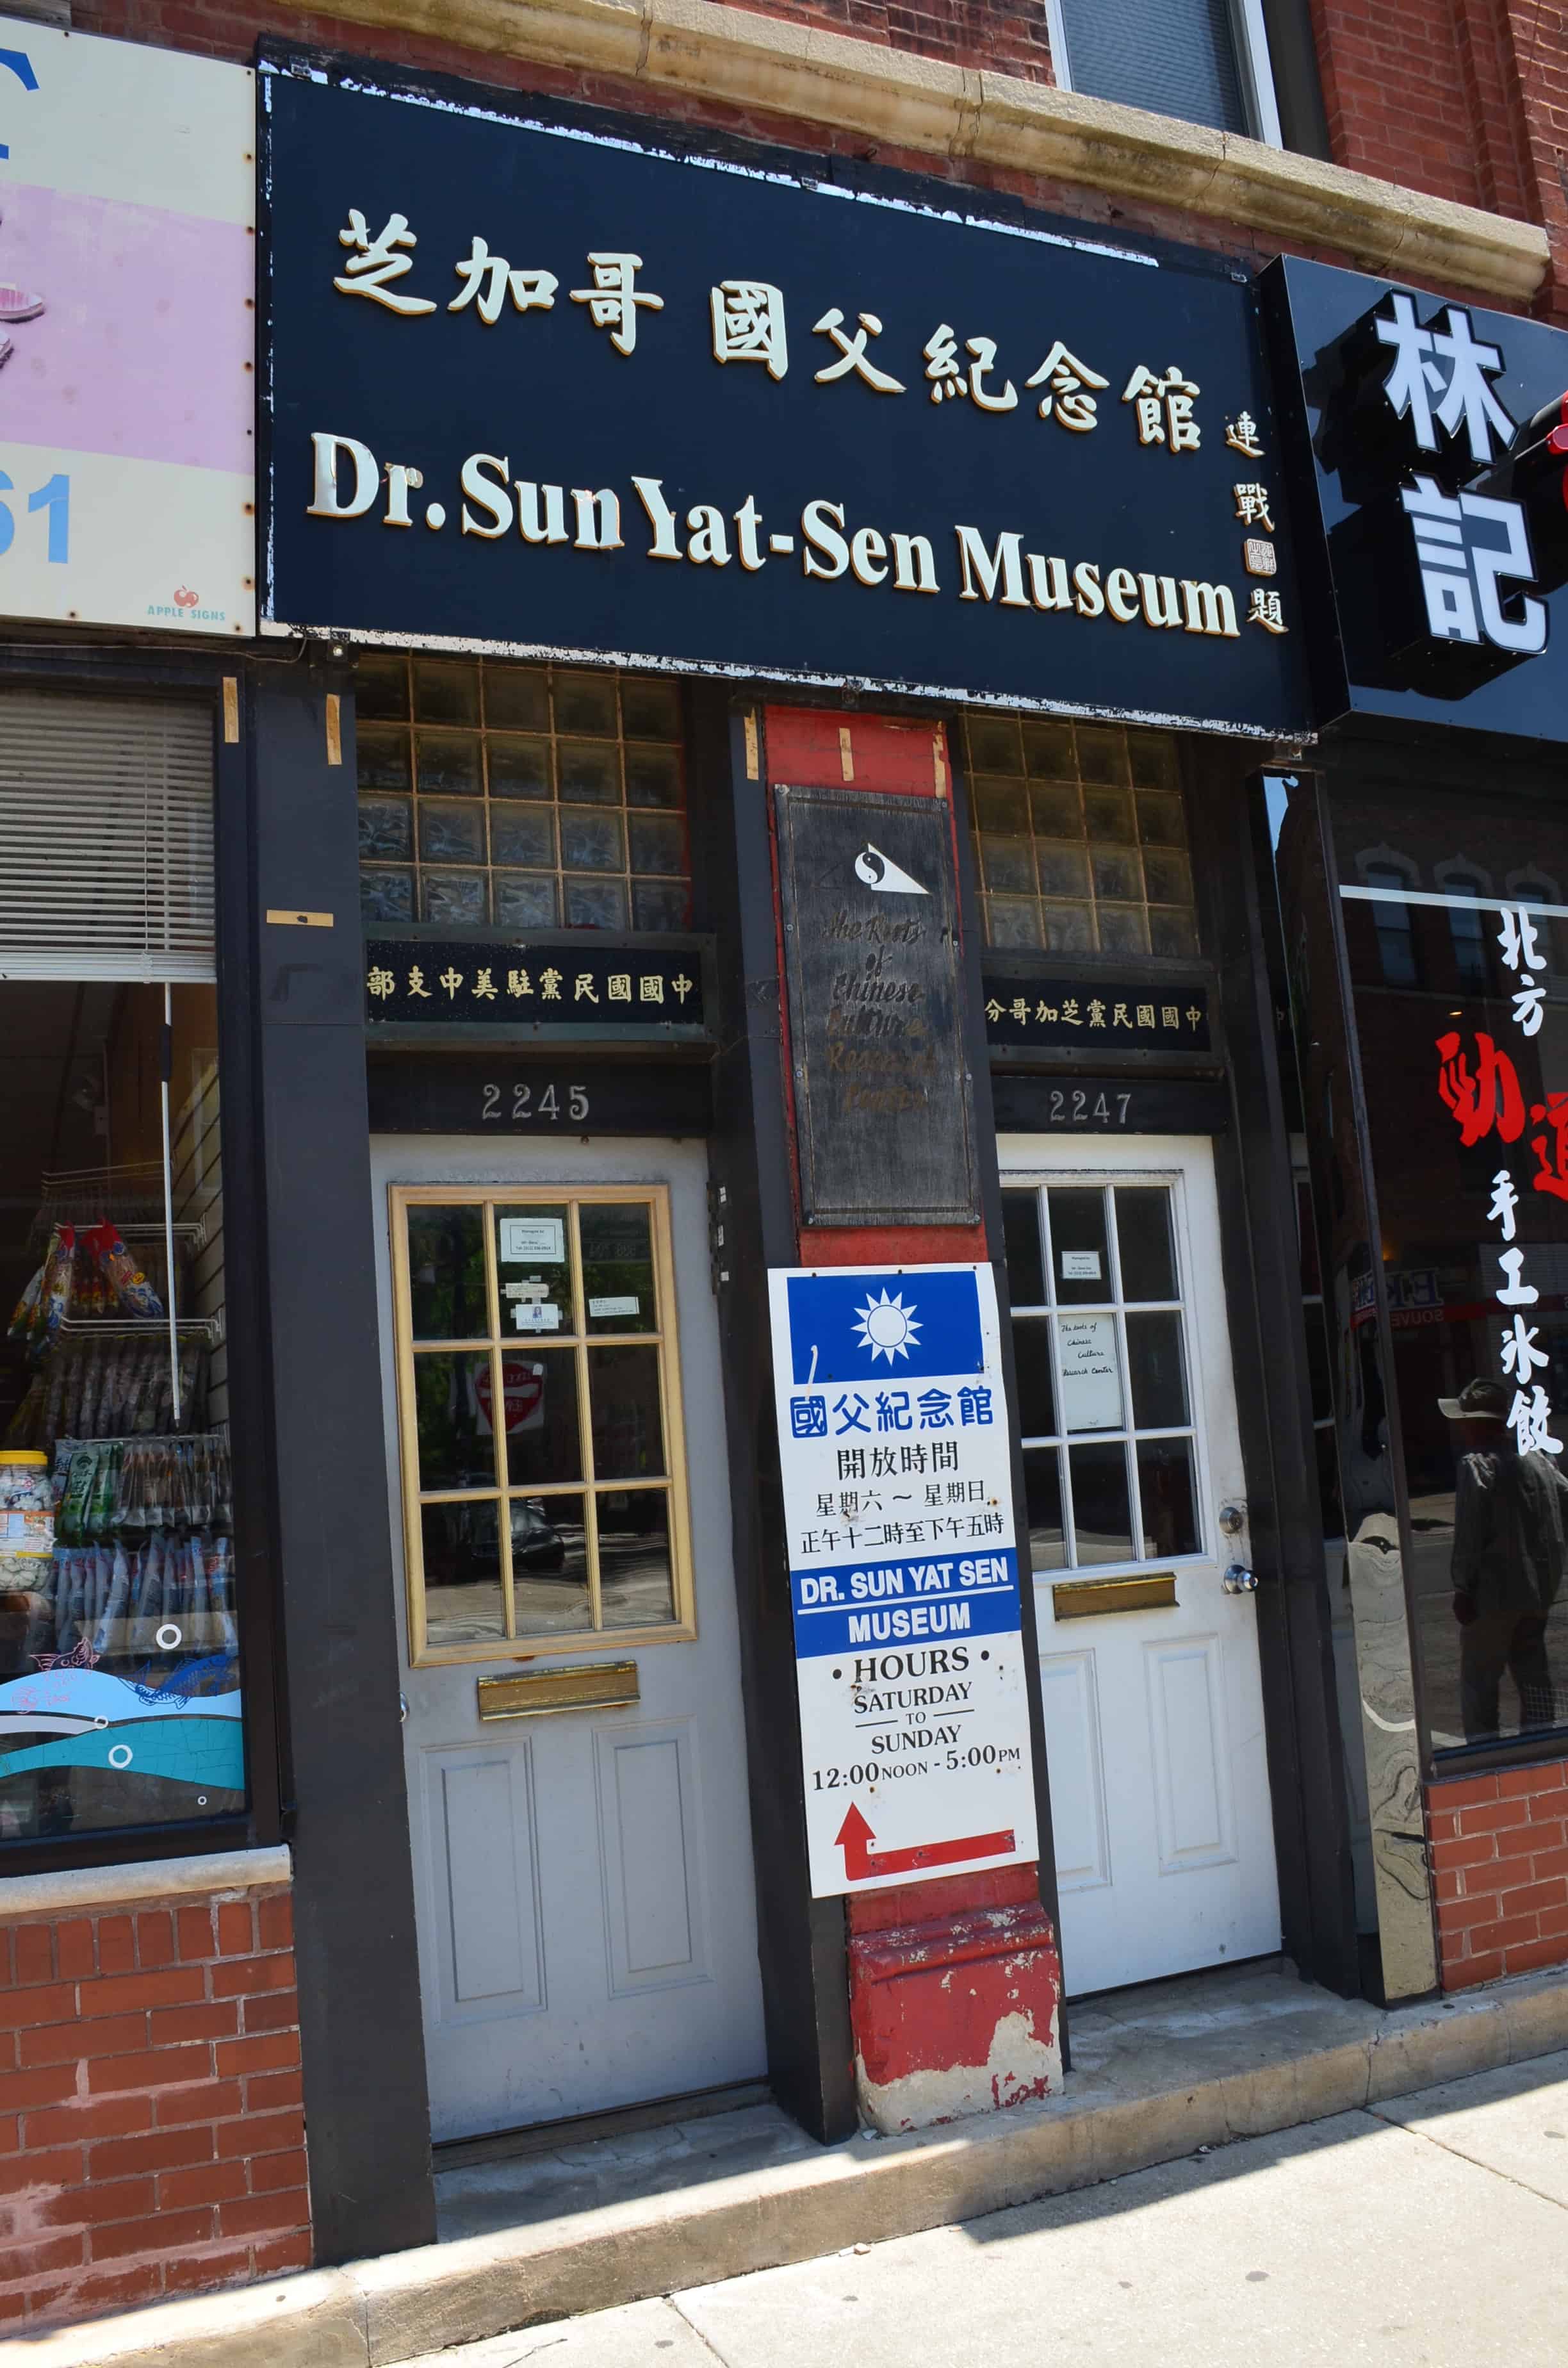 Dr. Sun Yat-sen Museum in Chinatown, Chicago, Illinois